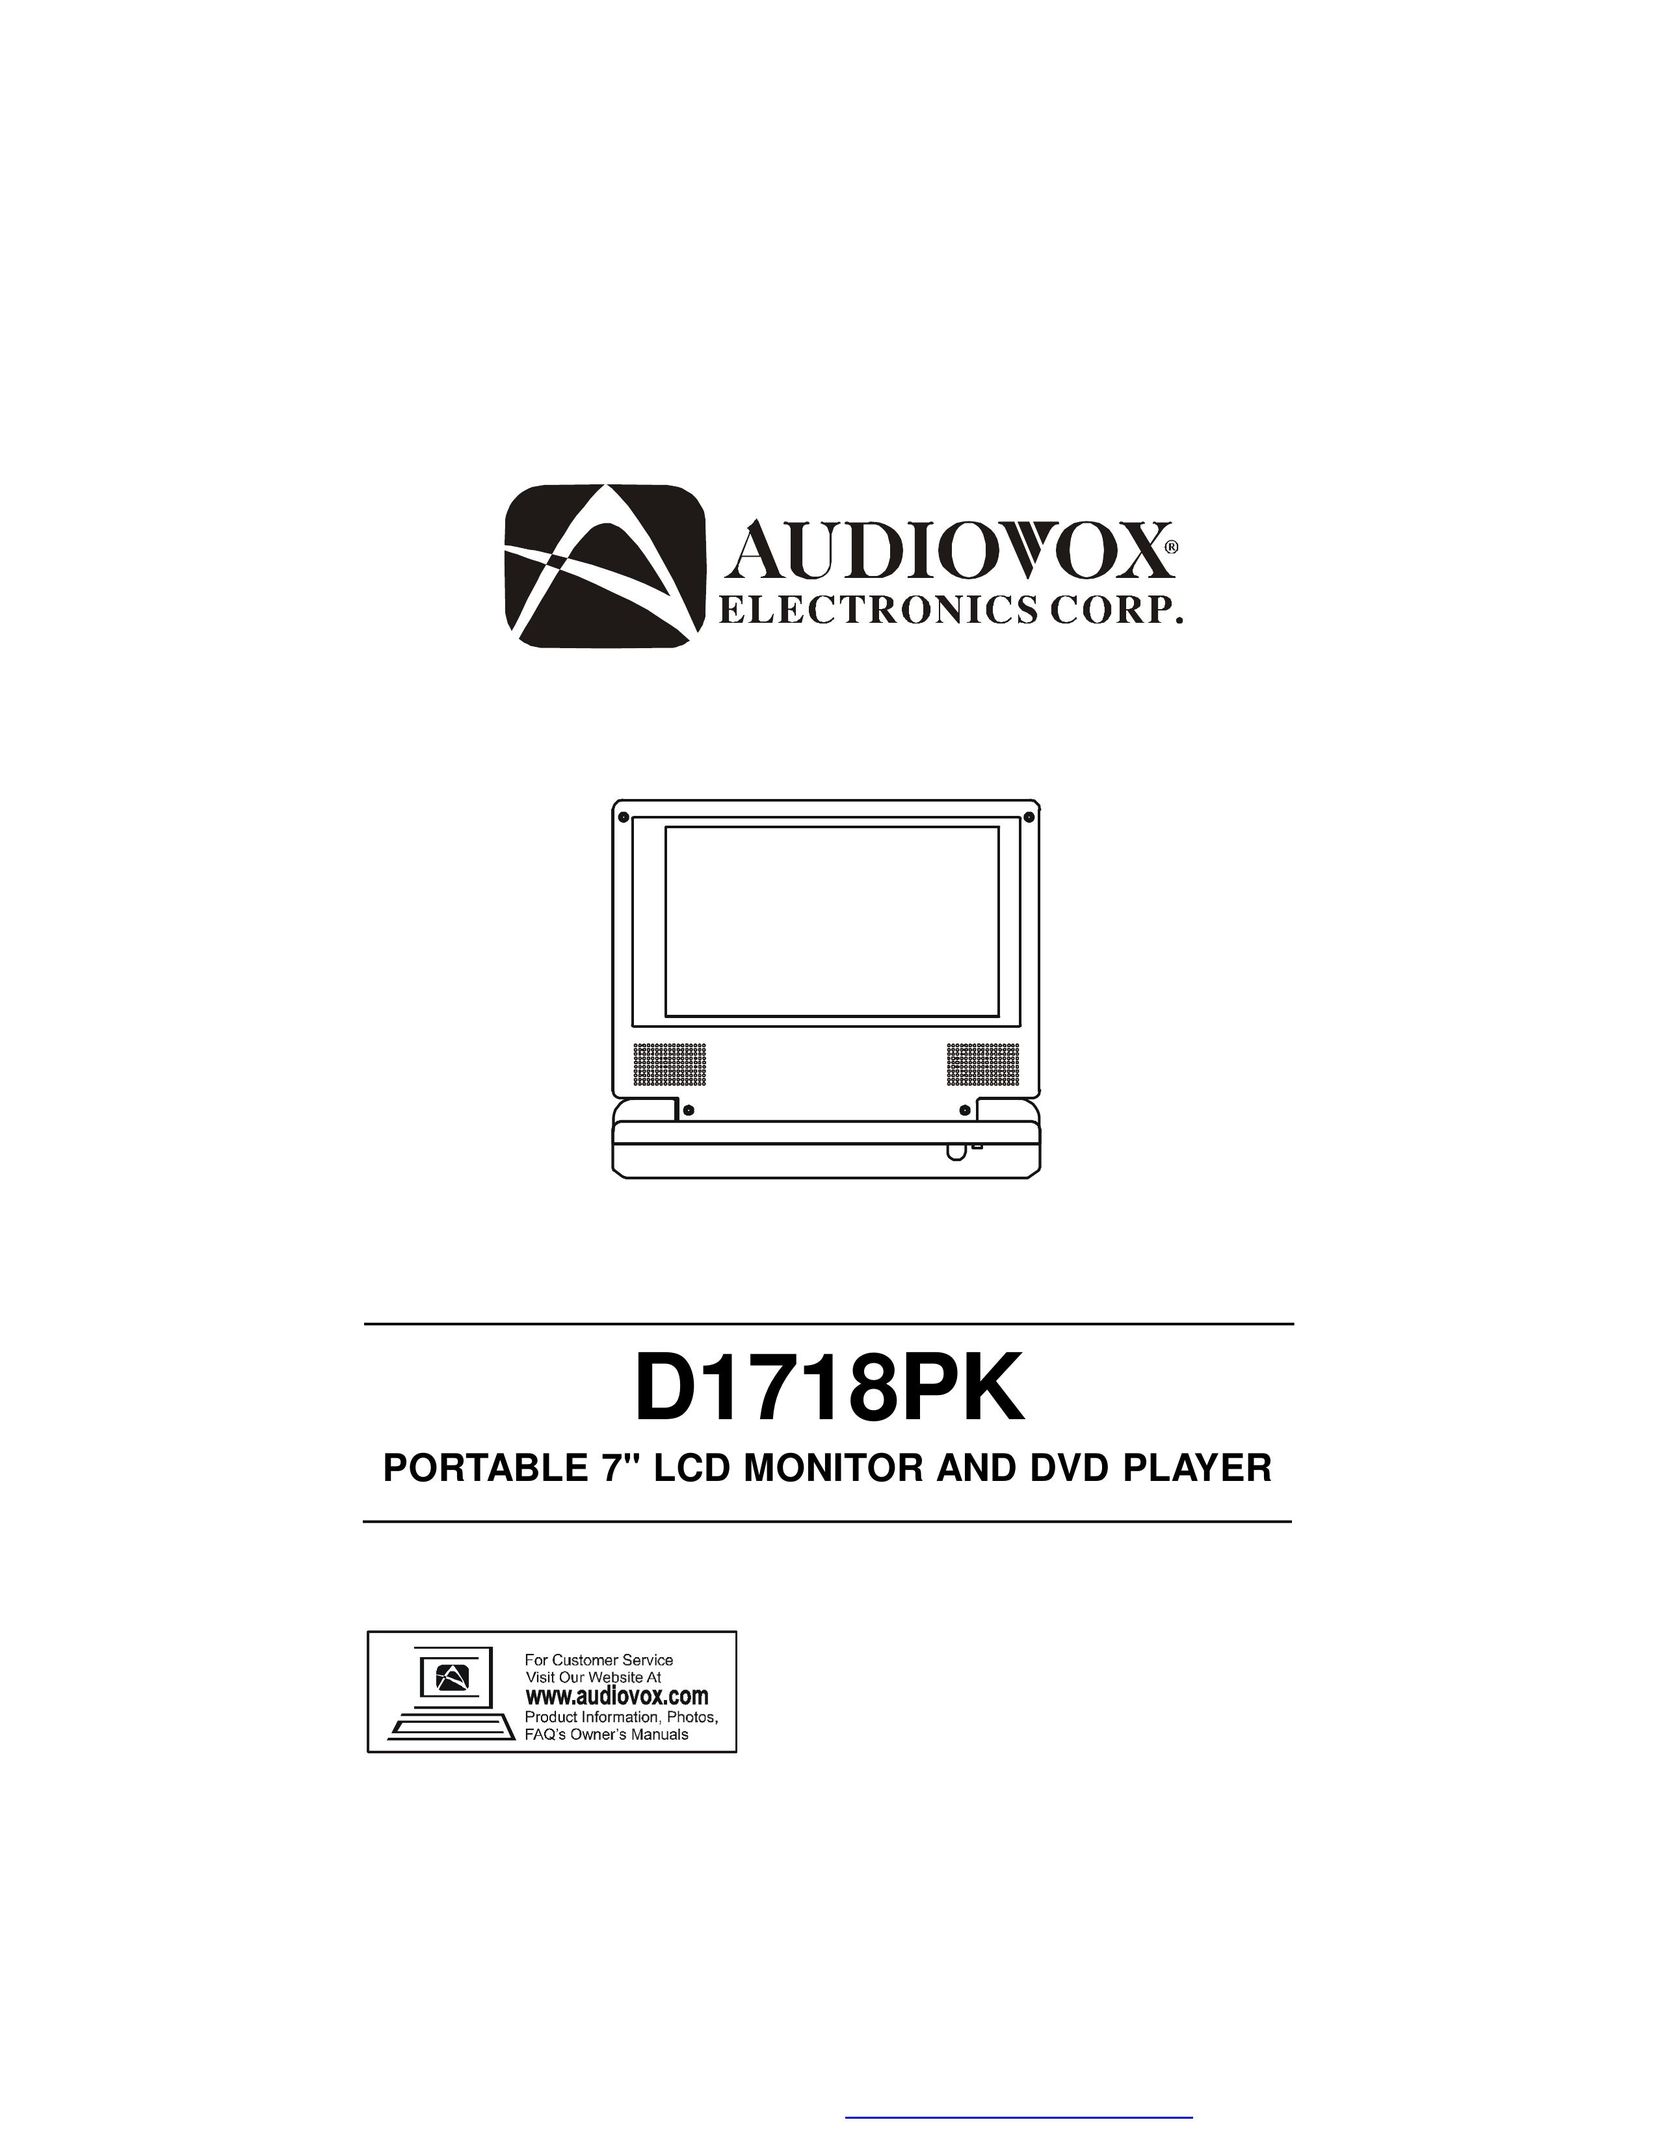 Audiovox D1718PK DVD Player User Manual